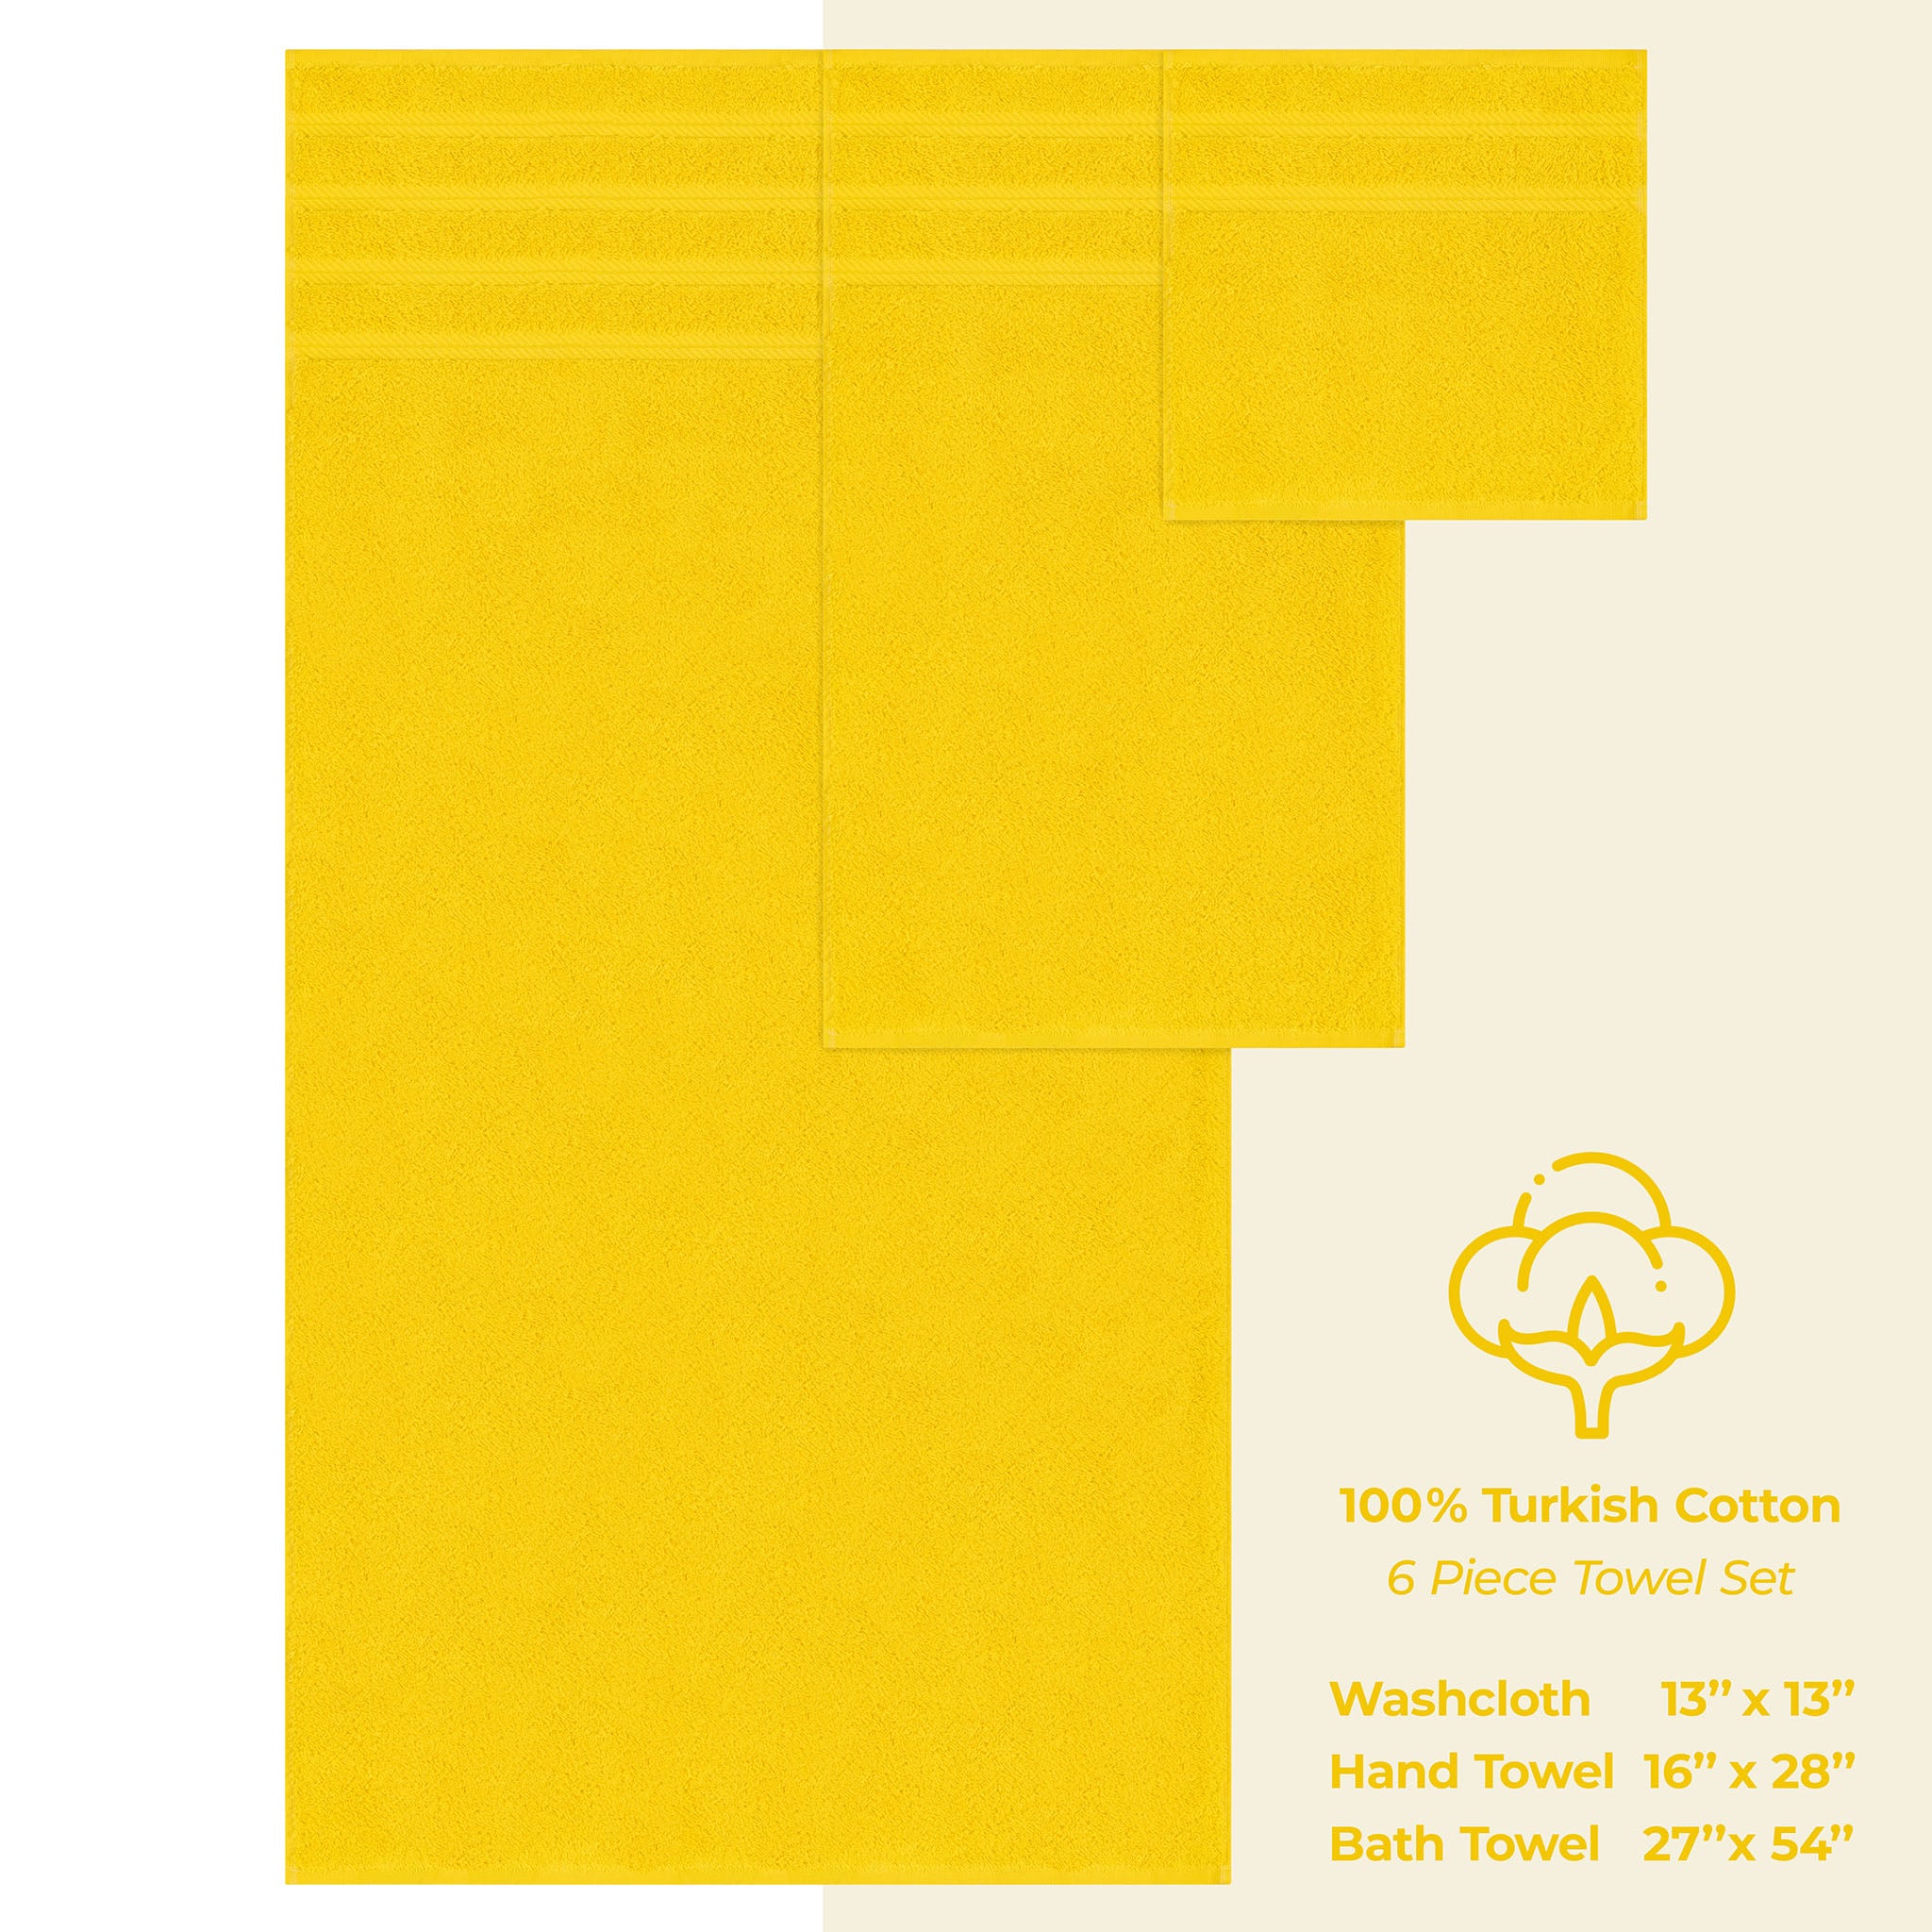 American Soft Linen 100% Turkish Cotton 6 Piece Towel Set Wholesale yellow-4